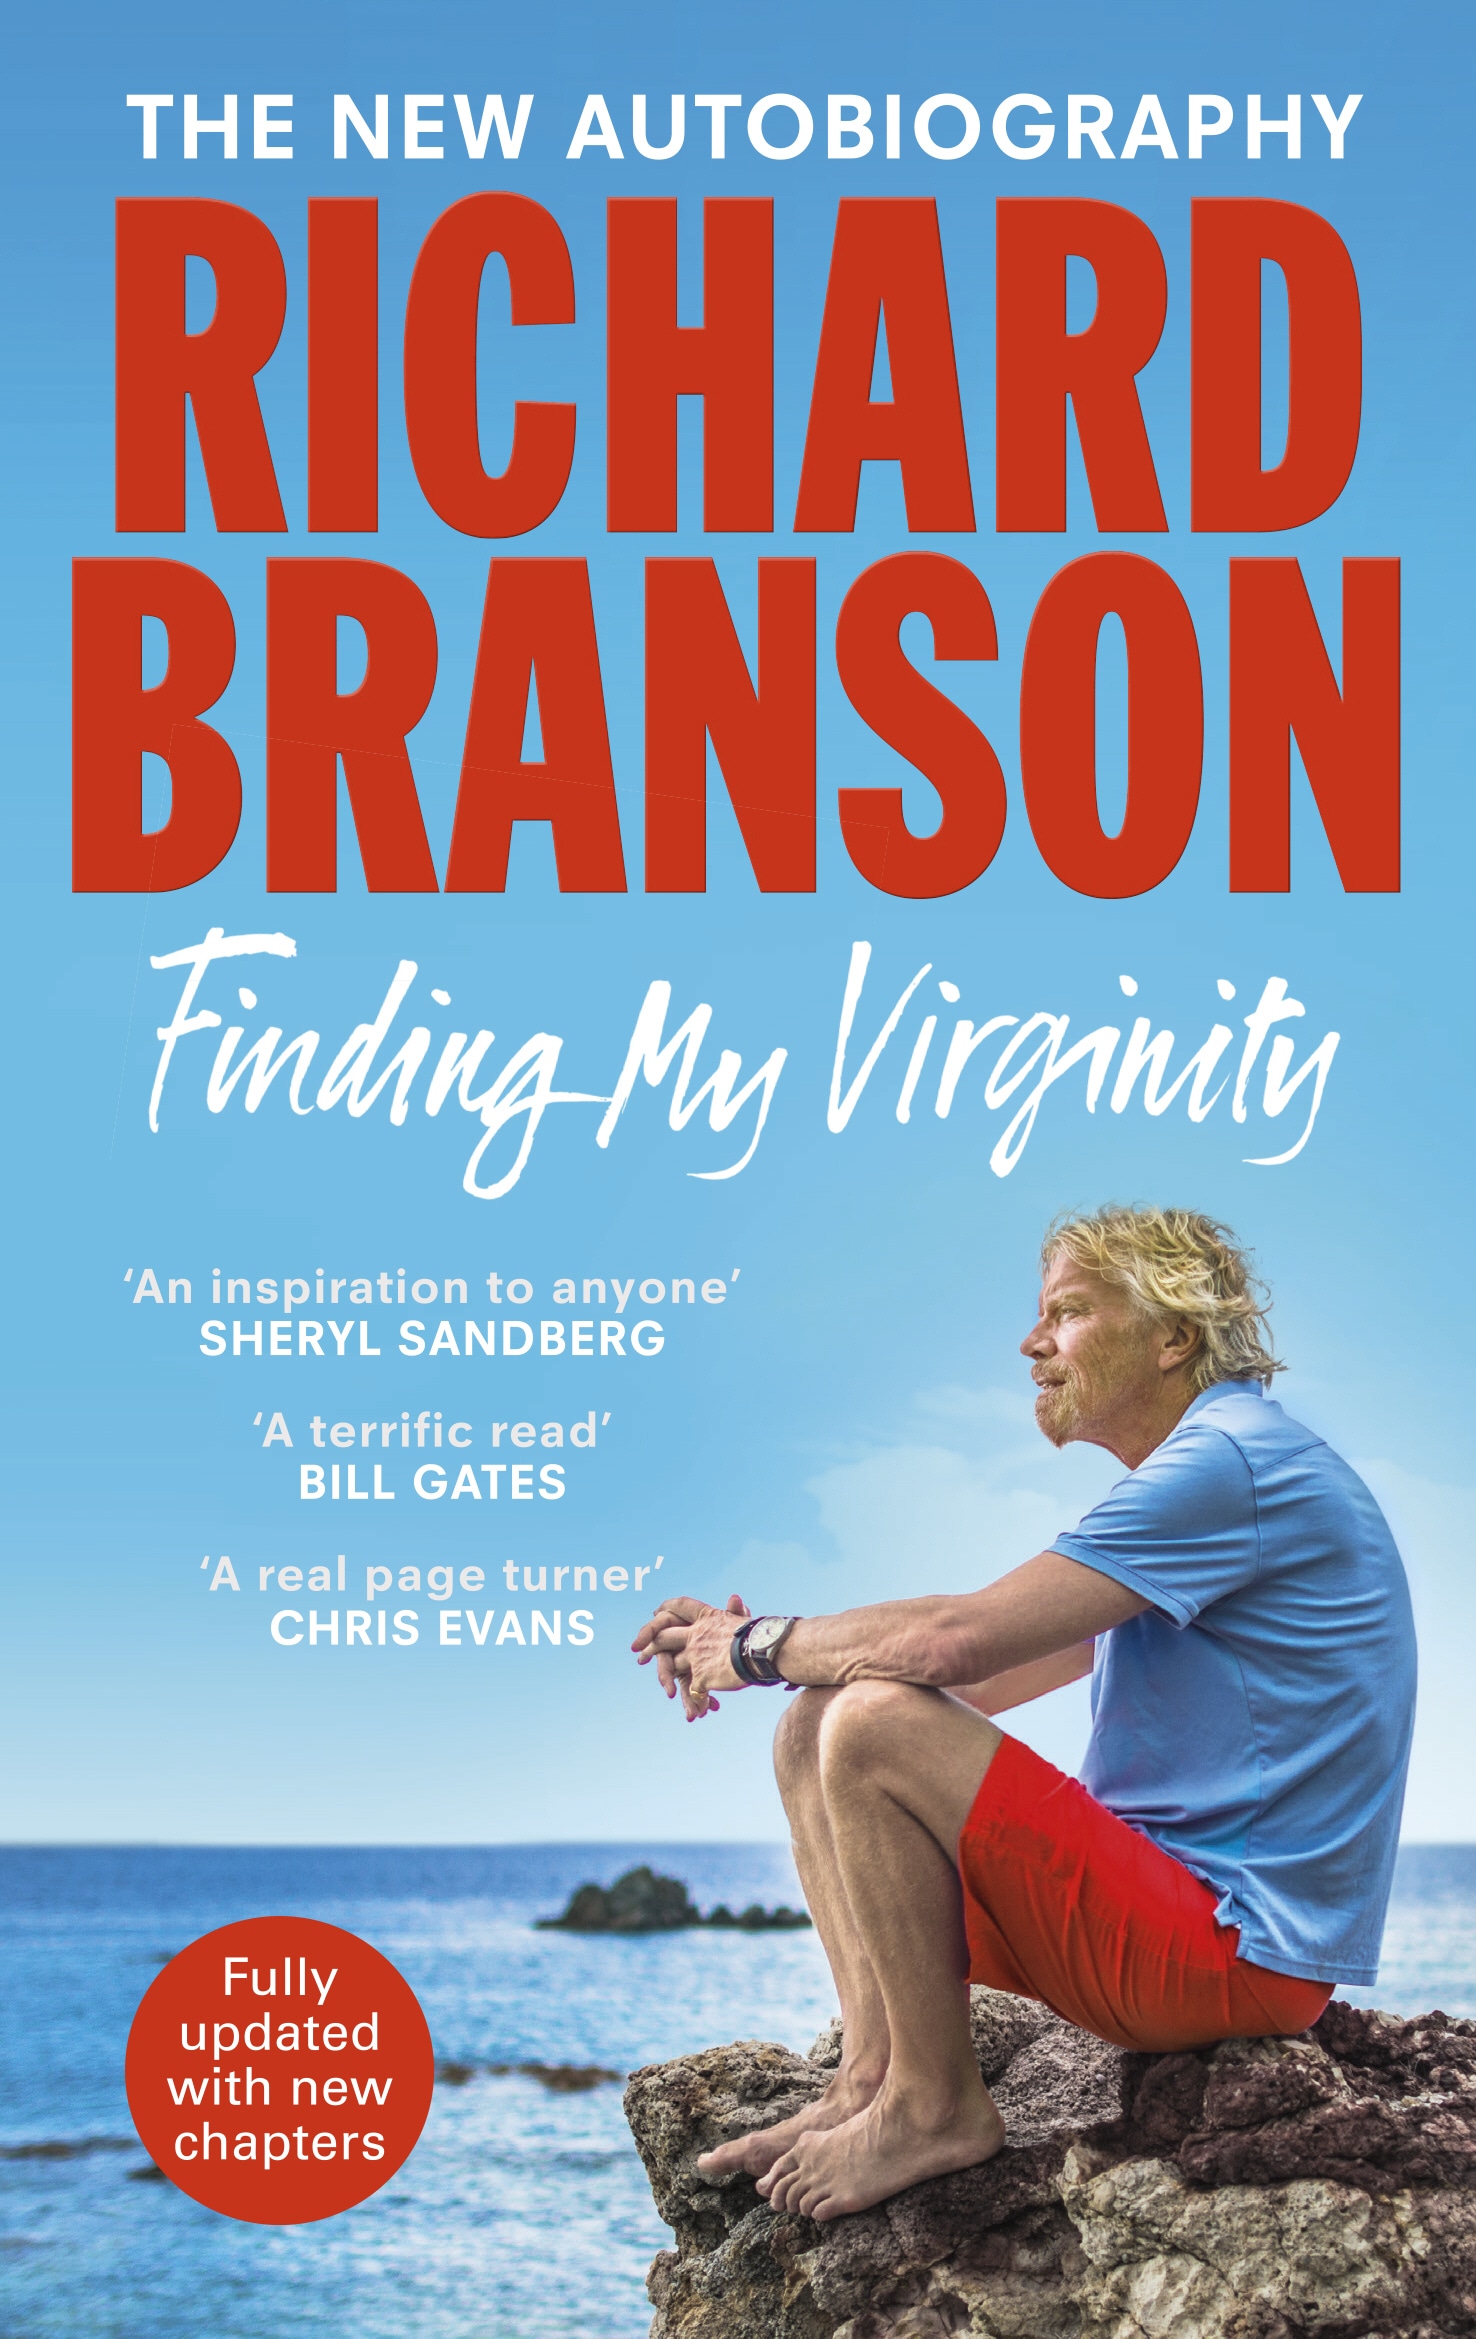 Book “Finding My Virginity” by Sir Richard Branson — July 5, 2018